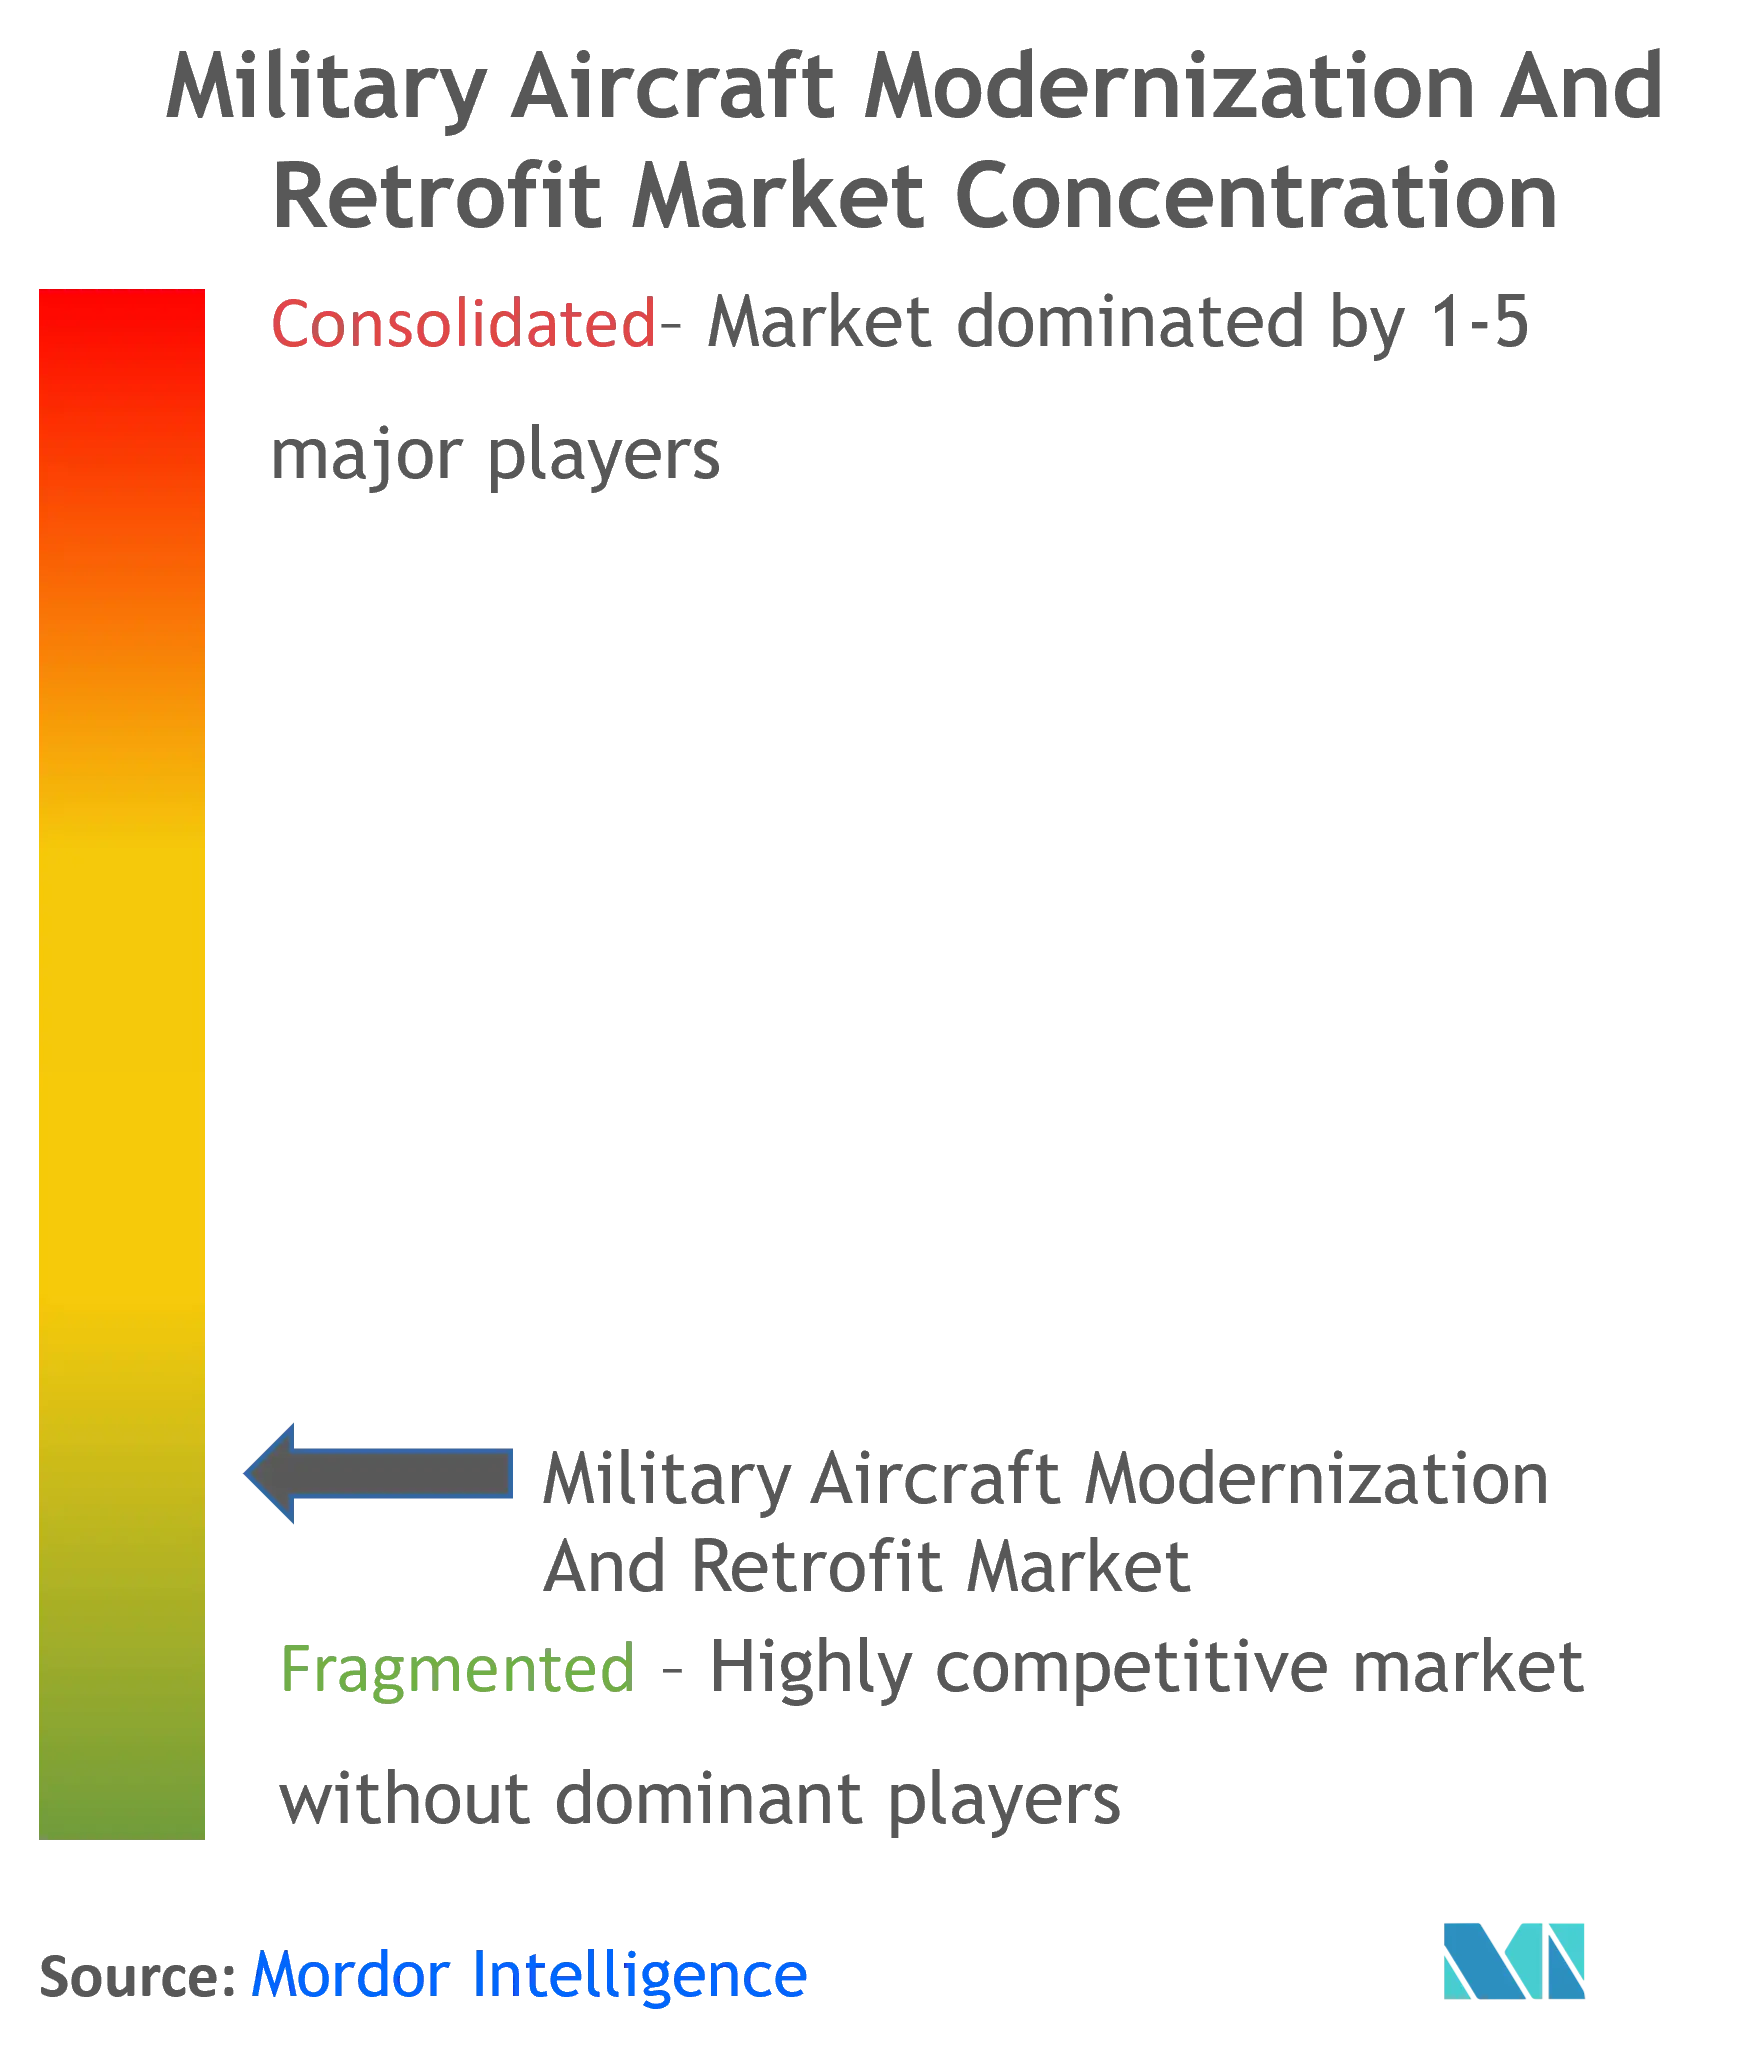 Military Aircraft Modernization And Retrofit Market Concentration